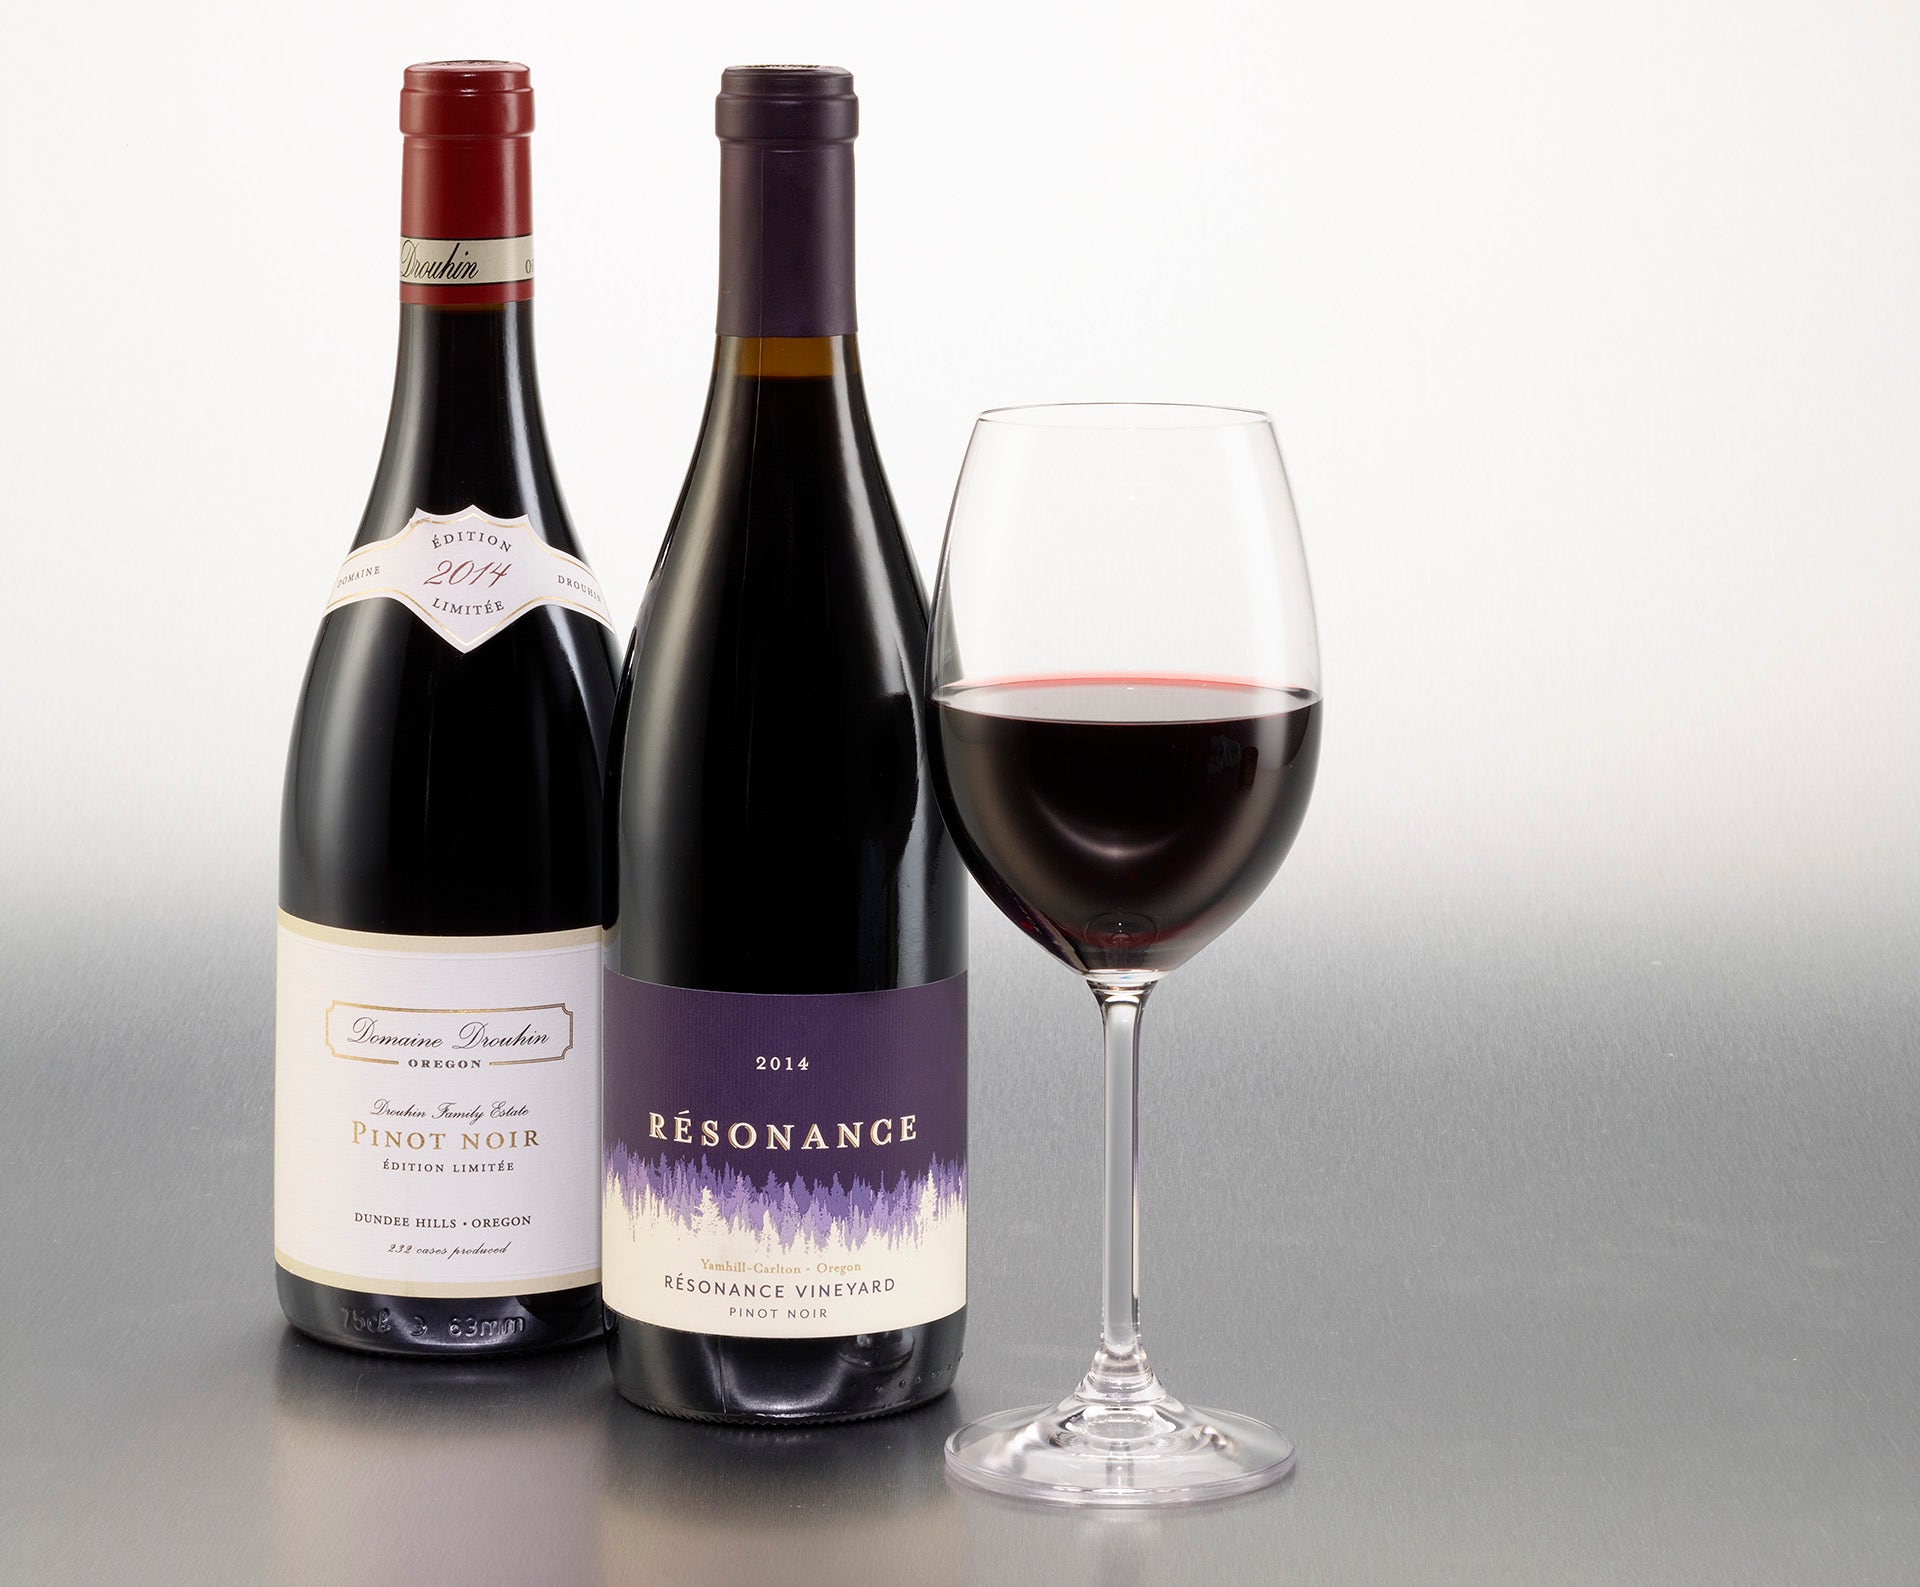 Pinot Noir from Domaine Drouhin Oregon and Résonance. 